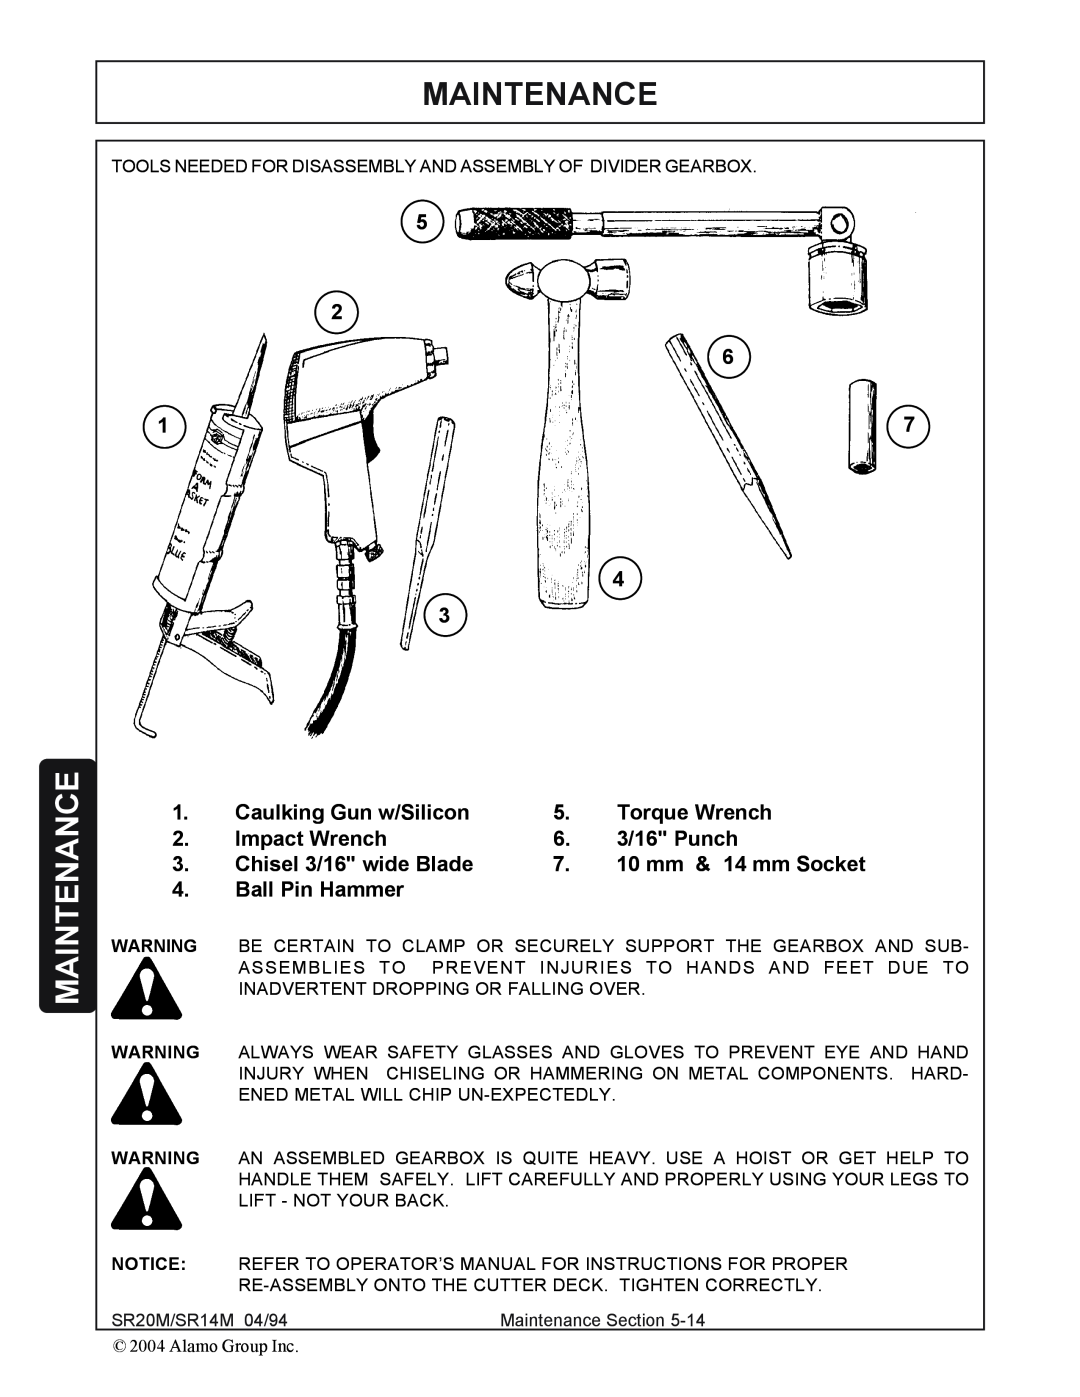 Alamo SR20, SR14 Maintenance, Caulking Gun w/Silicon, Torque Wrench, Impact Wrench, 3/16 Punch, Chisel 3/16 wide Blade 